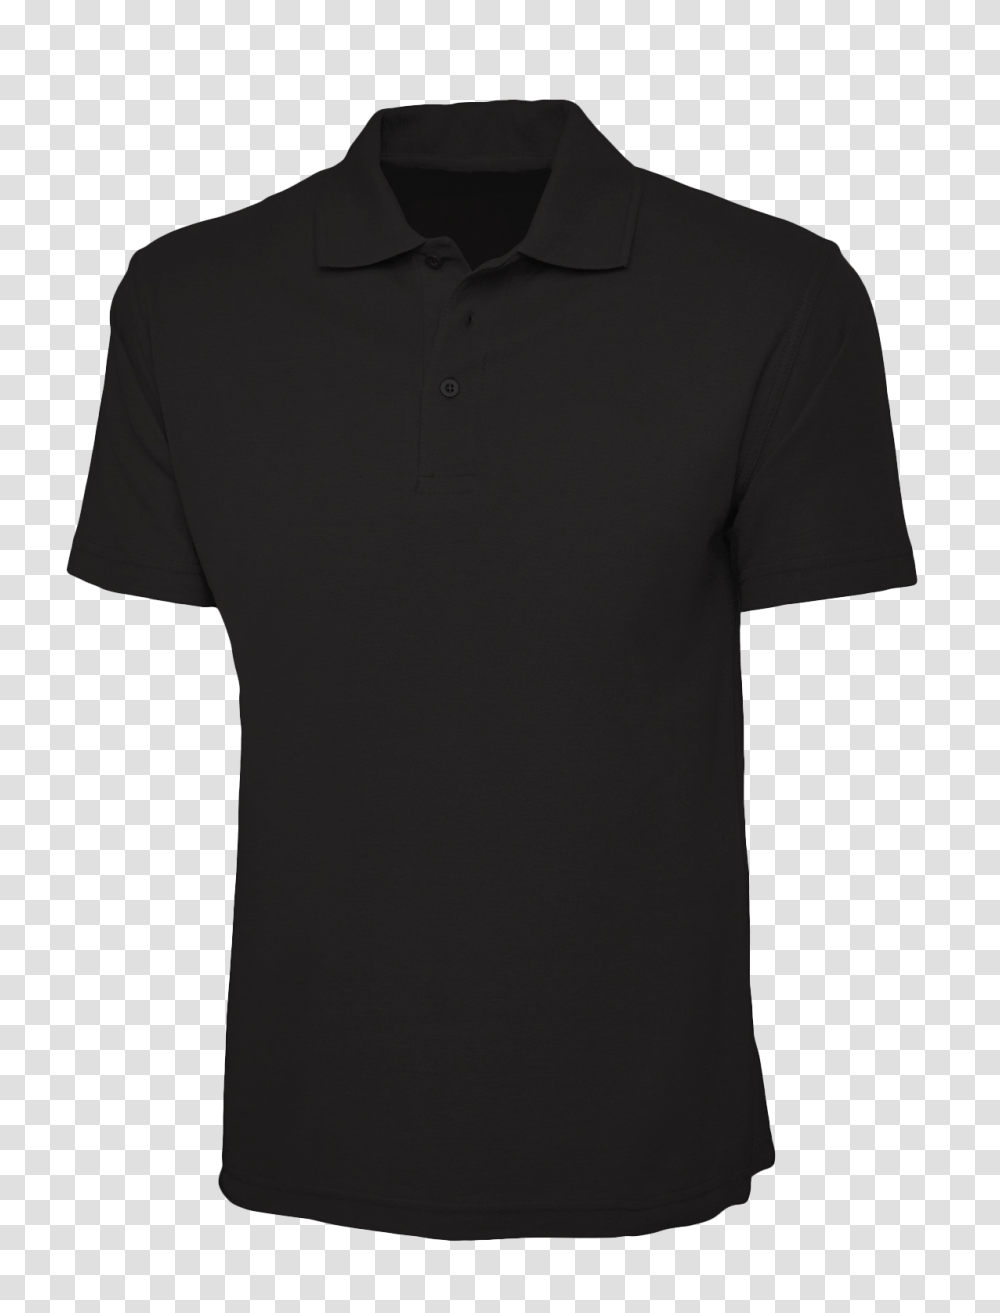 Black Polo Shirt Image, Apparel, Sleeve, T-Shirt Transparent Png